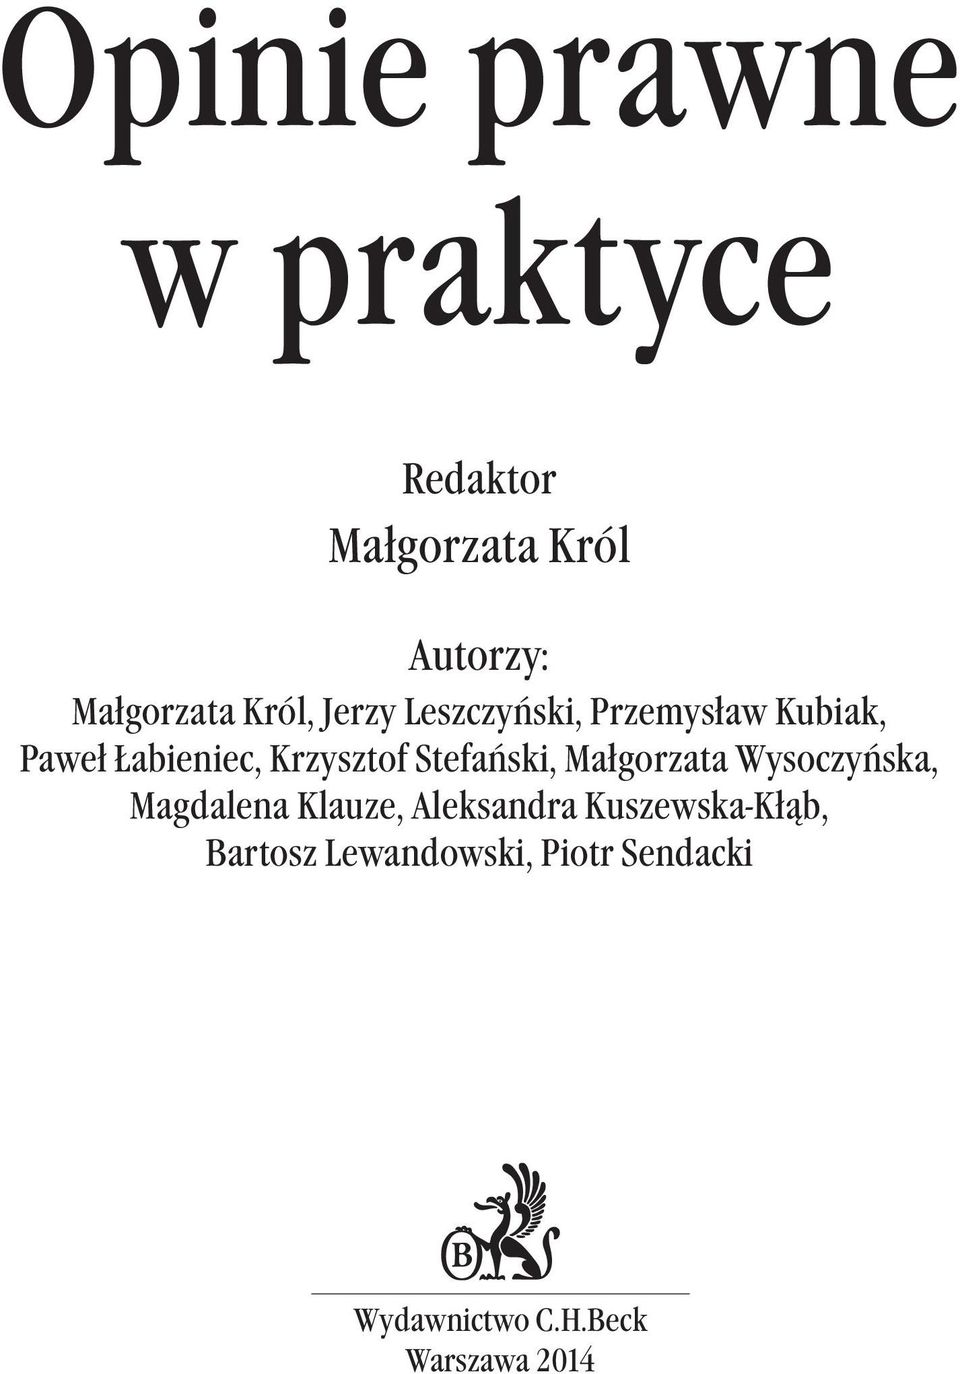 Stefański, Małgorzata Wysoczyńska, Magdalena Klauze, Aleksandra